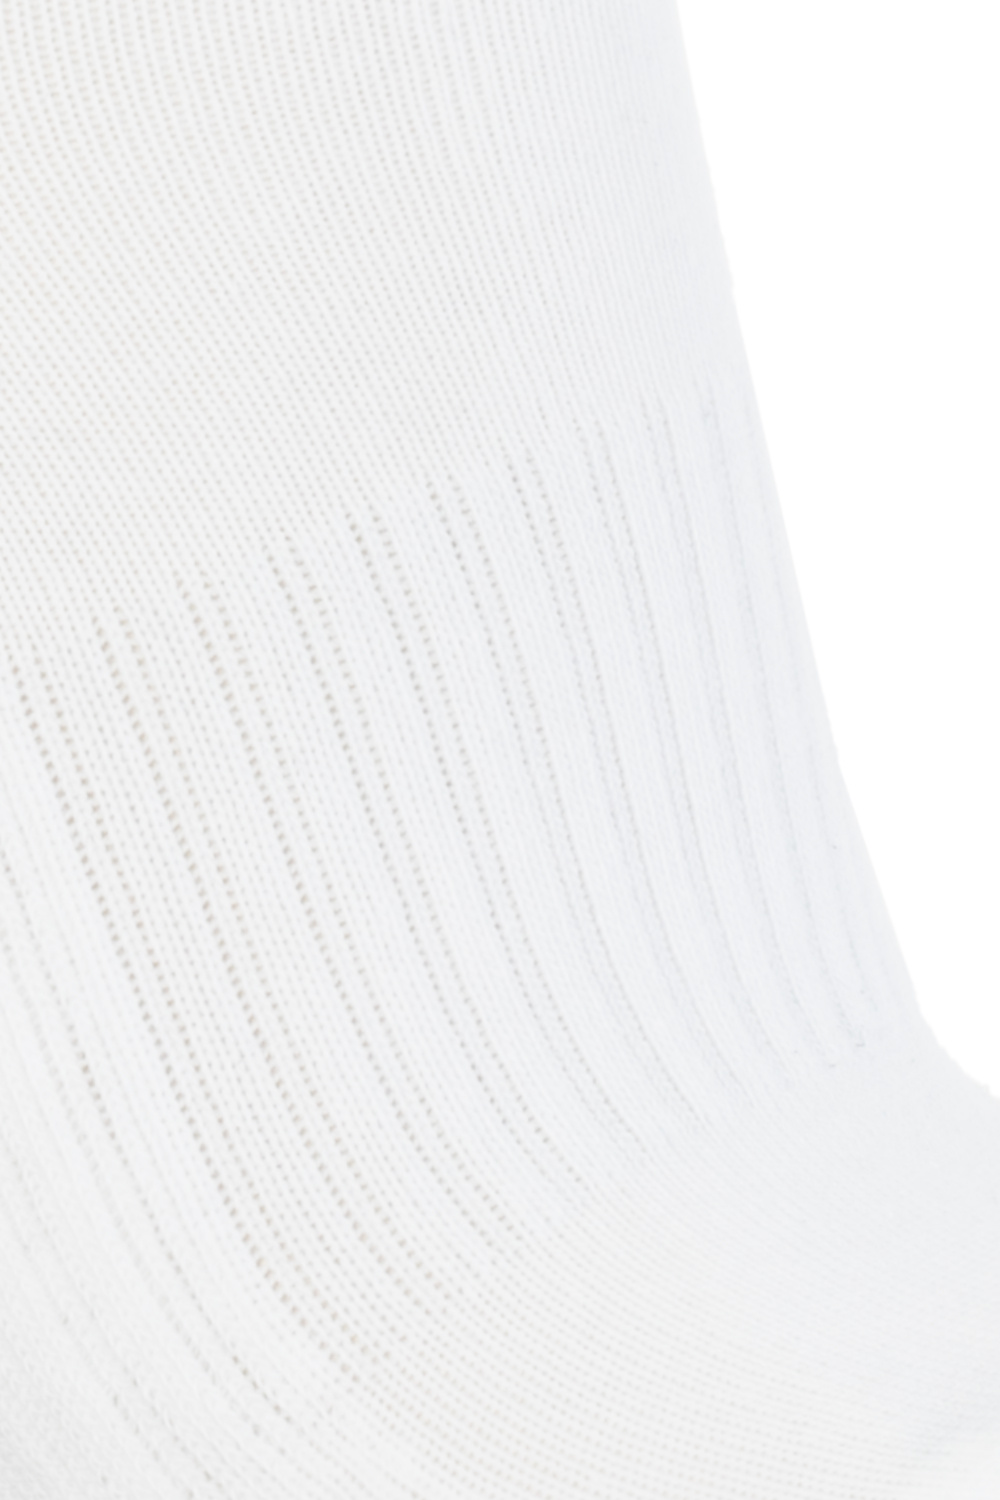 EA7 Emporio STRIPED armani Low-cut socks with logo